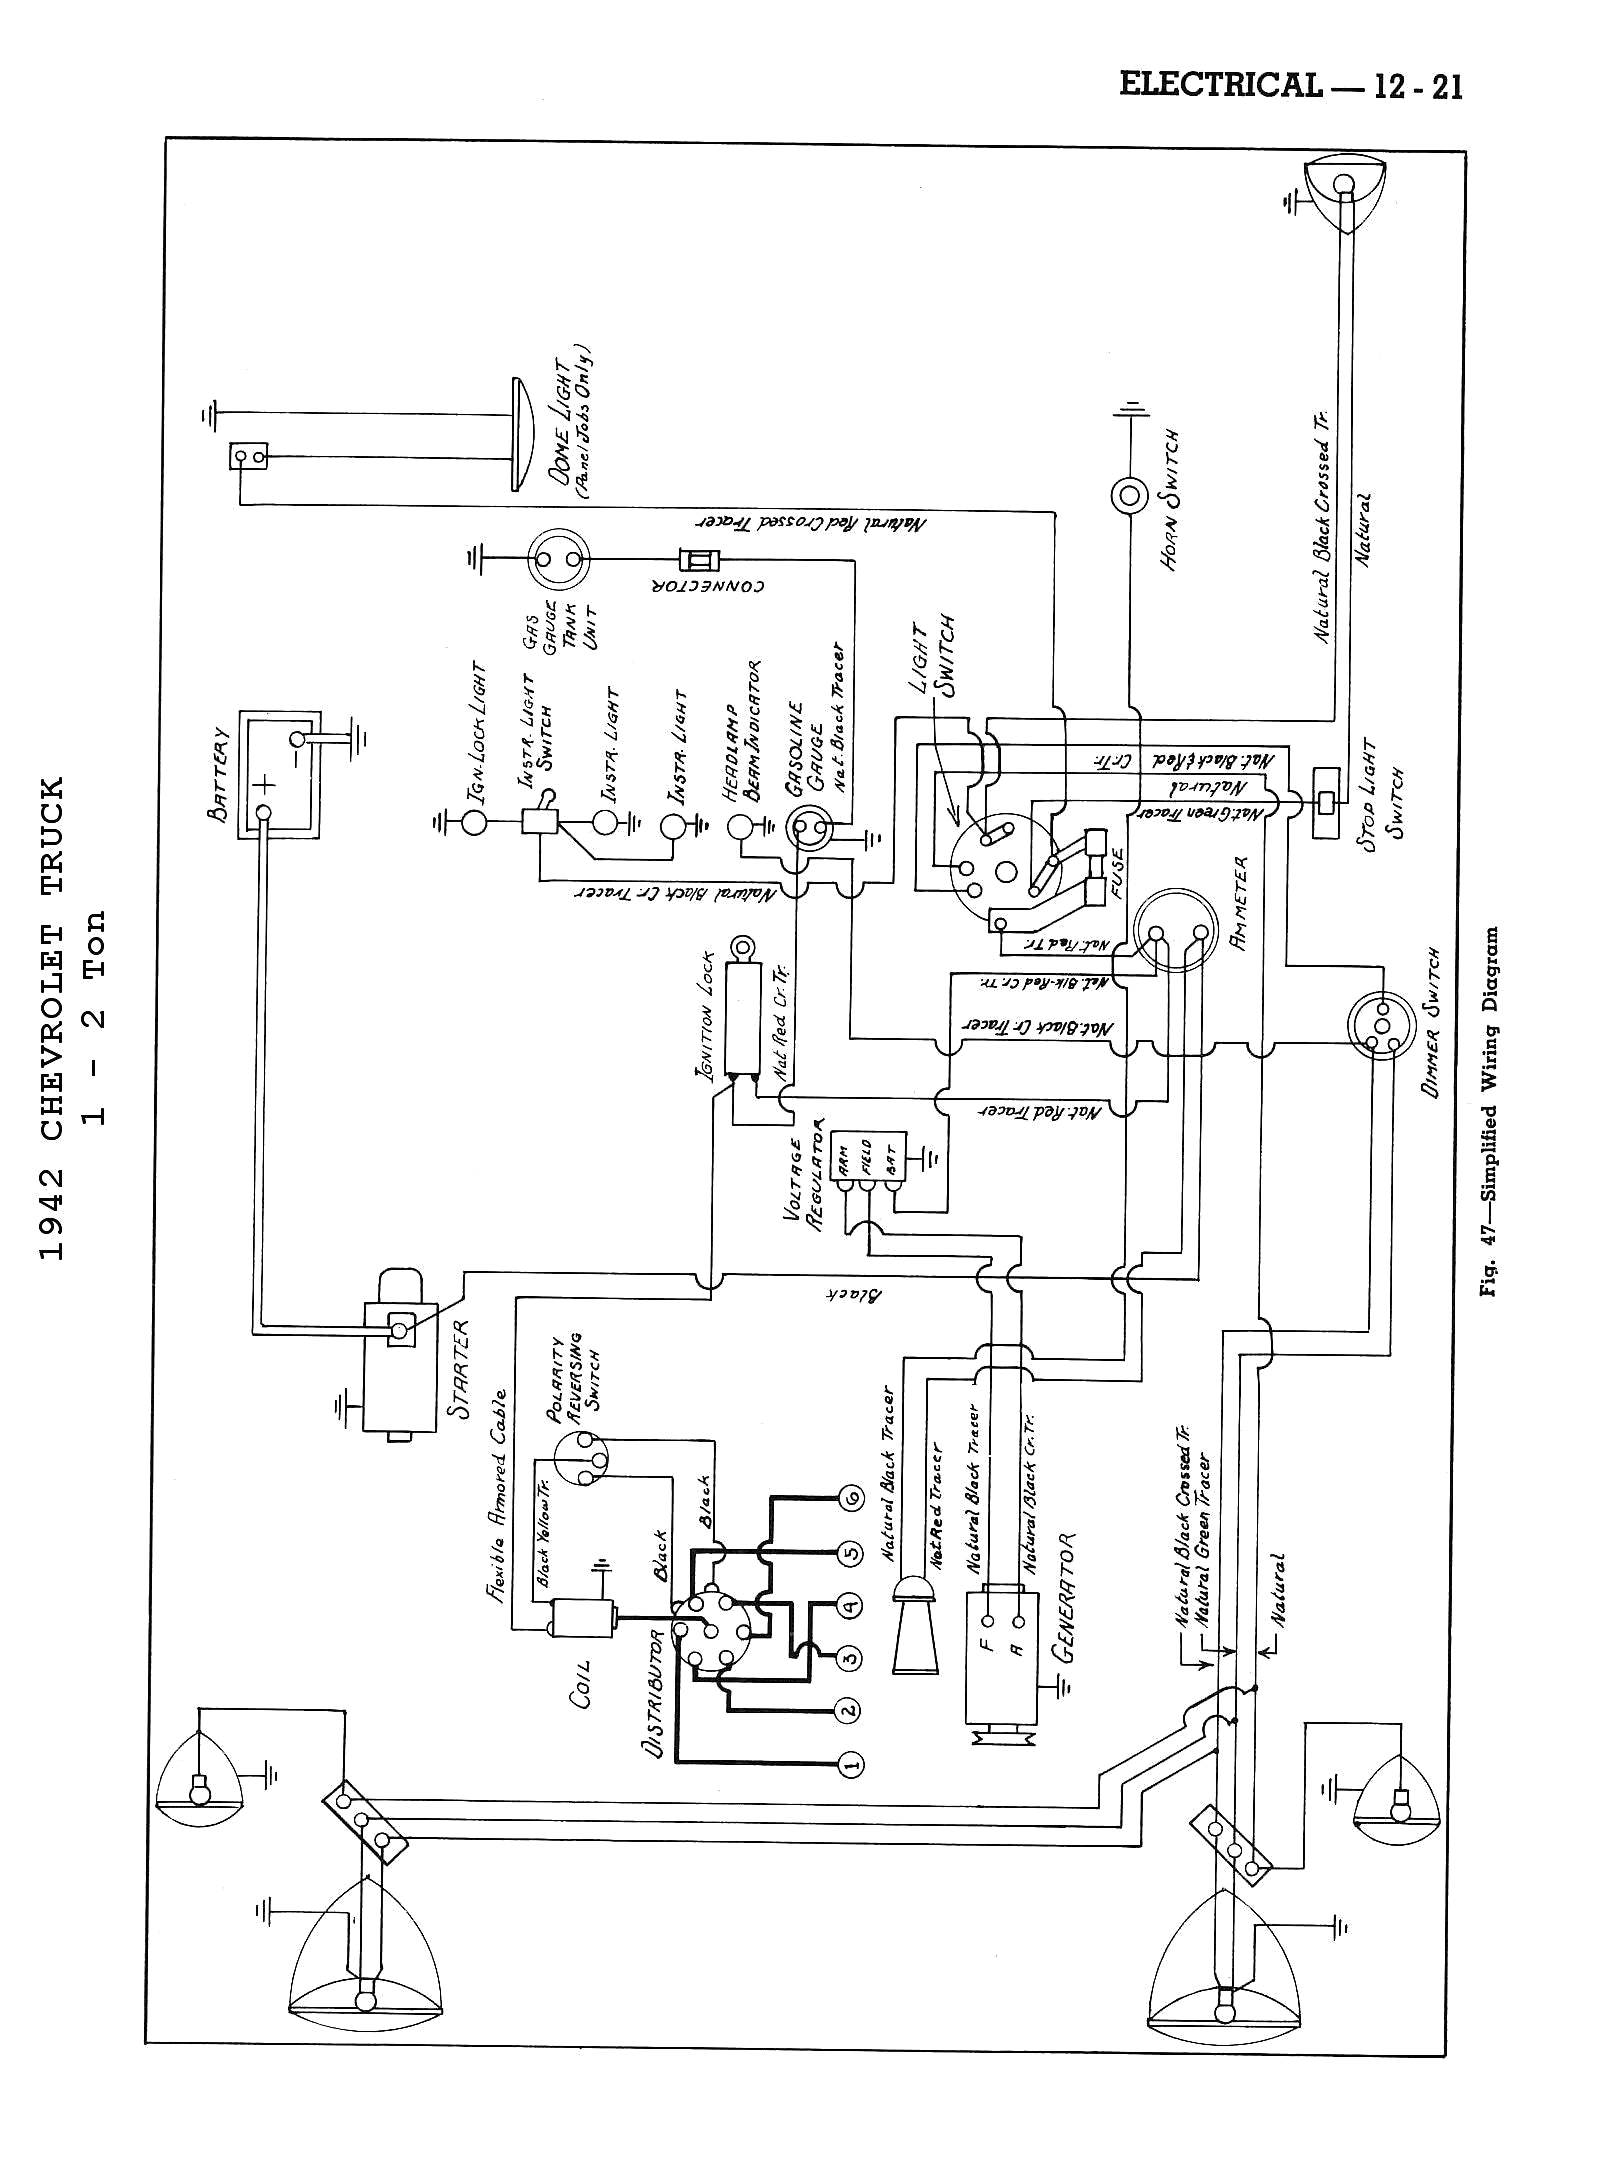 suburban model sw10de water heater wiring diagram rv at